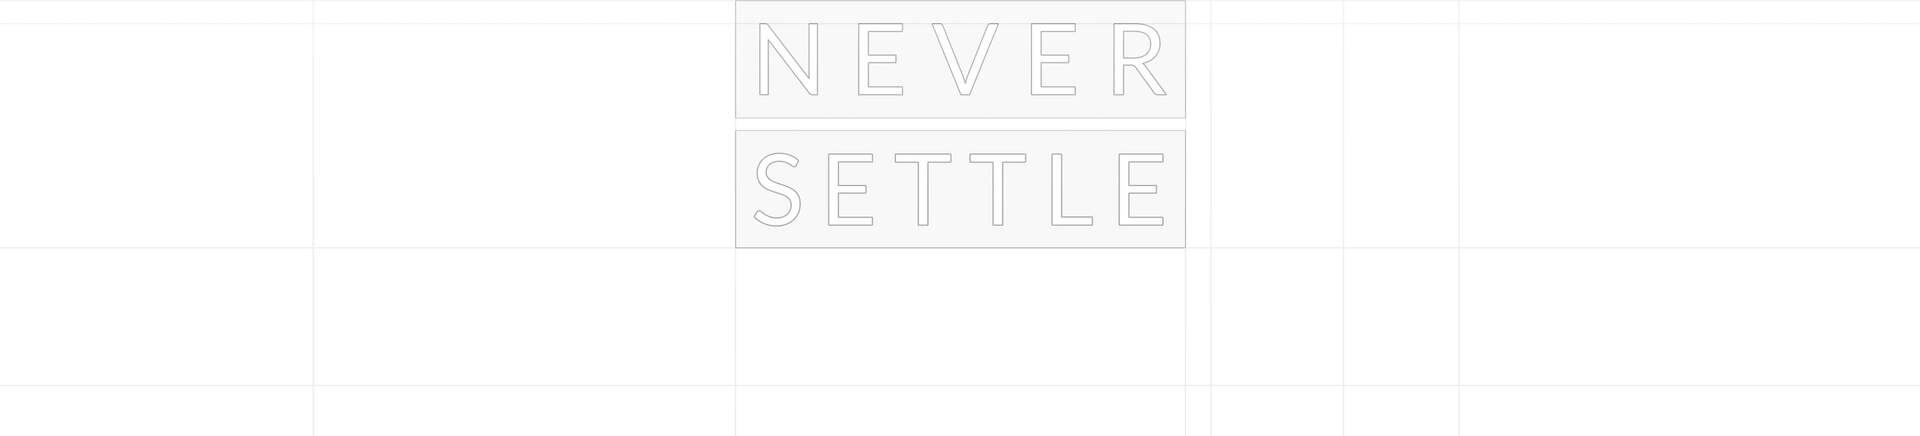 OnePlus Never Settle T-shirt